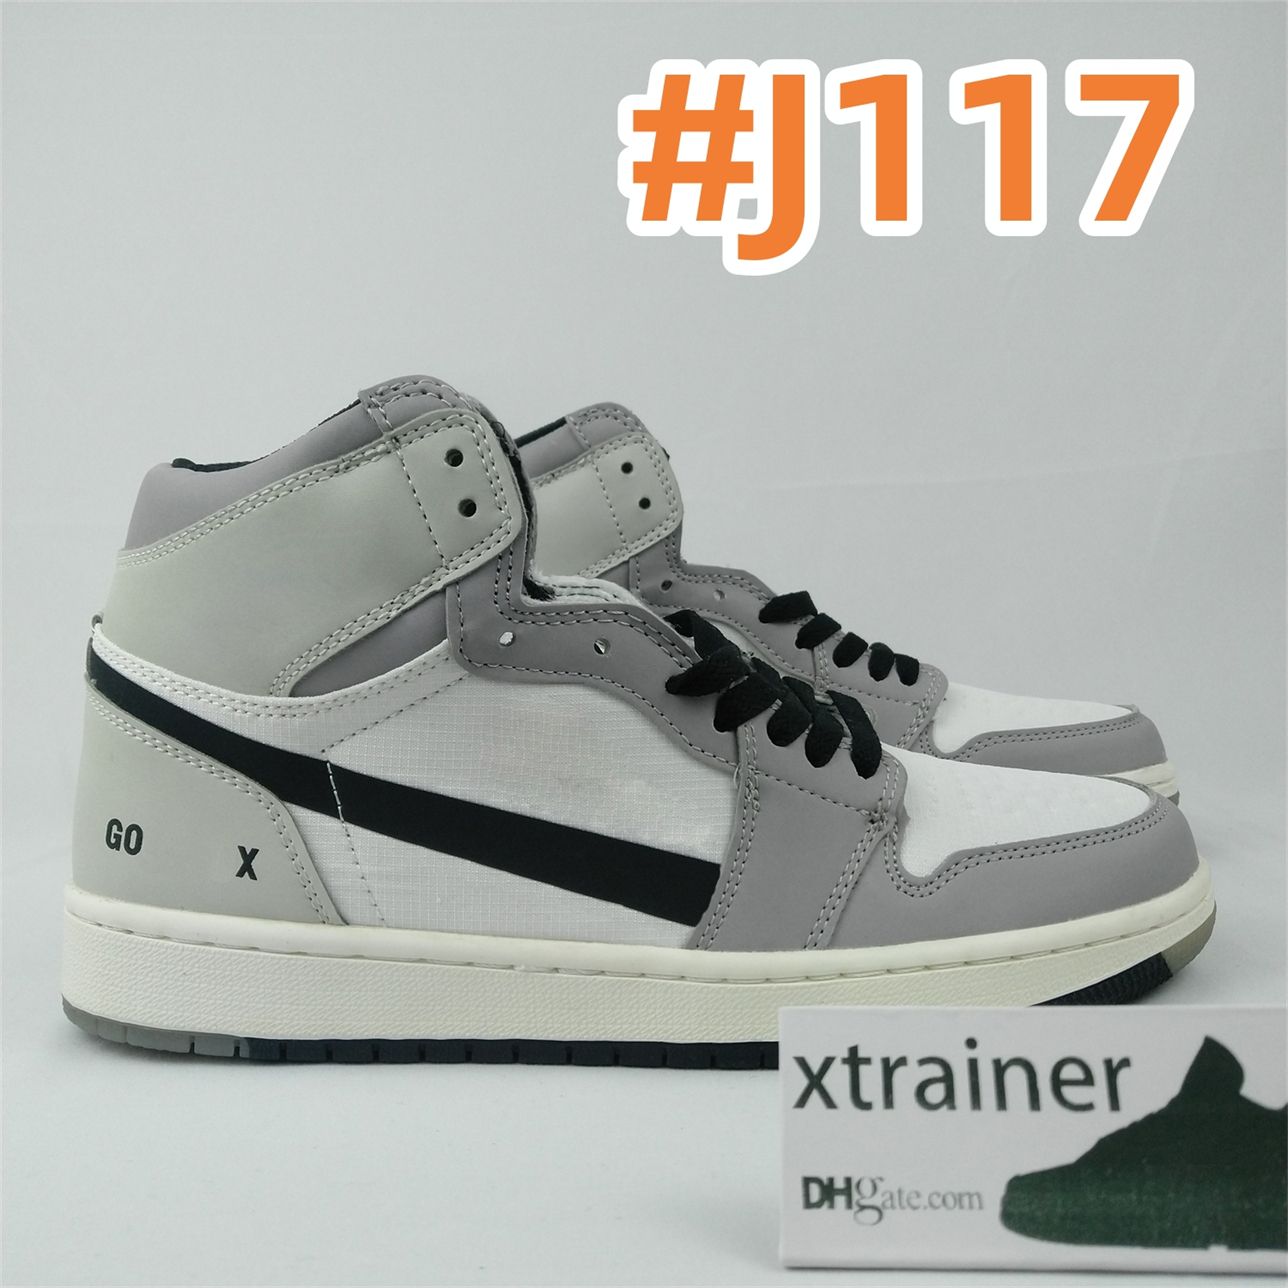 # J117